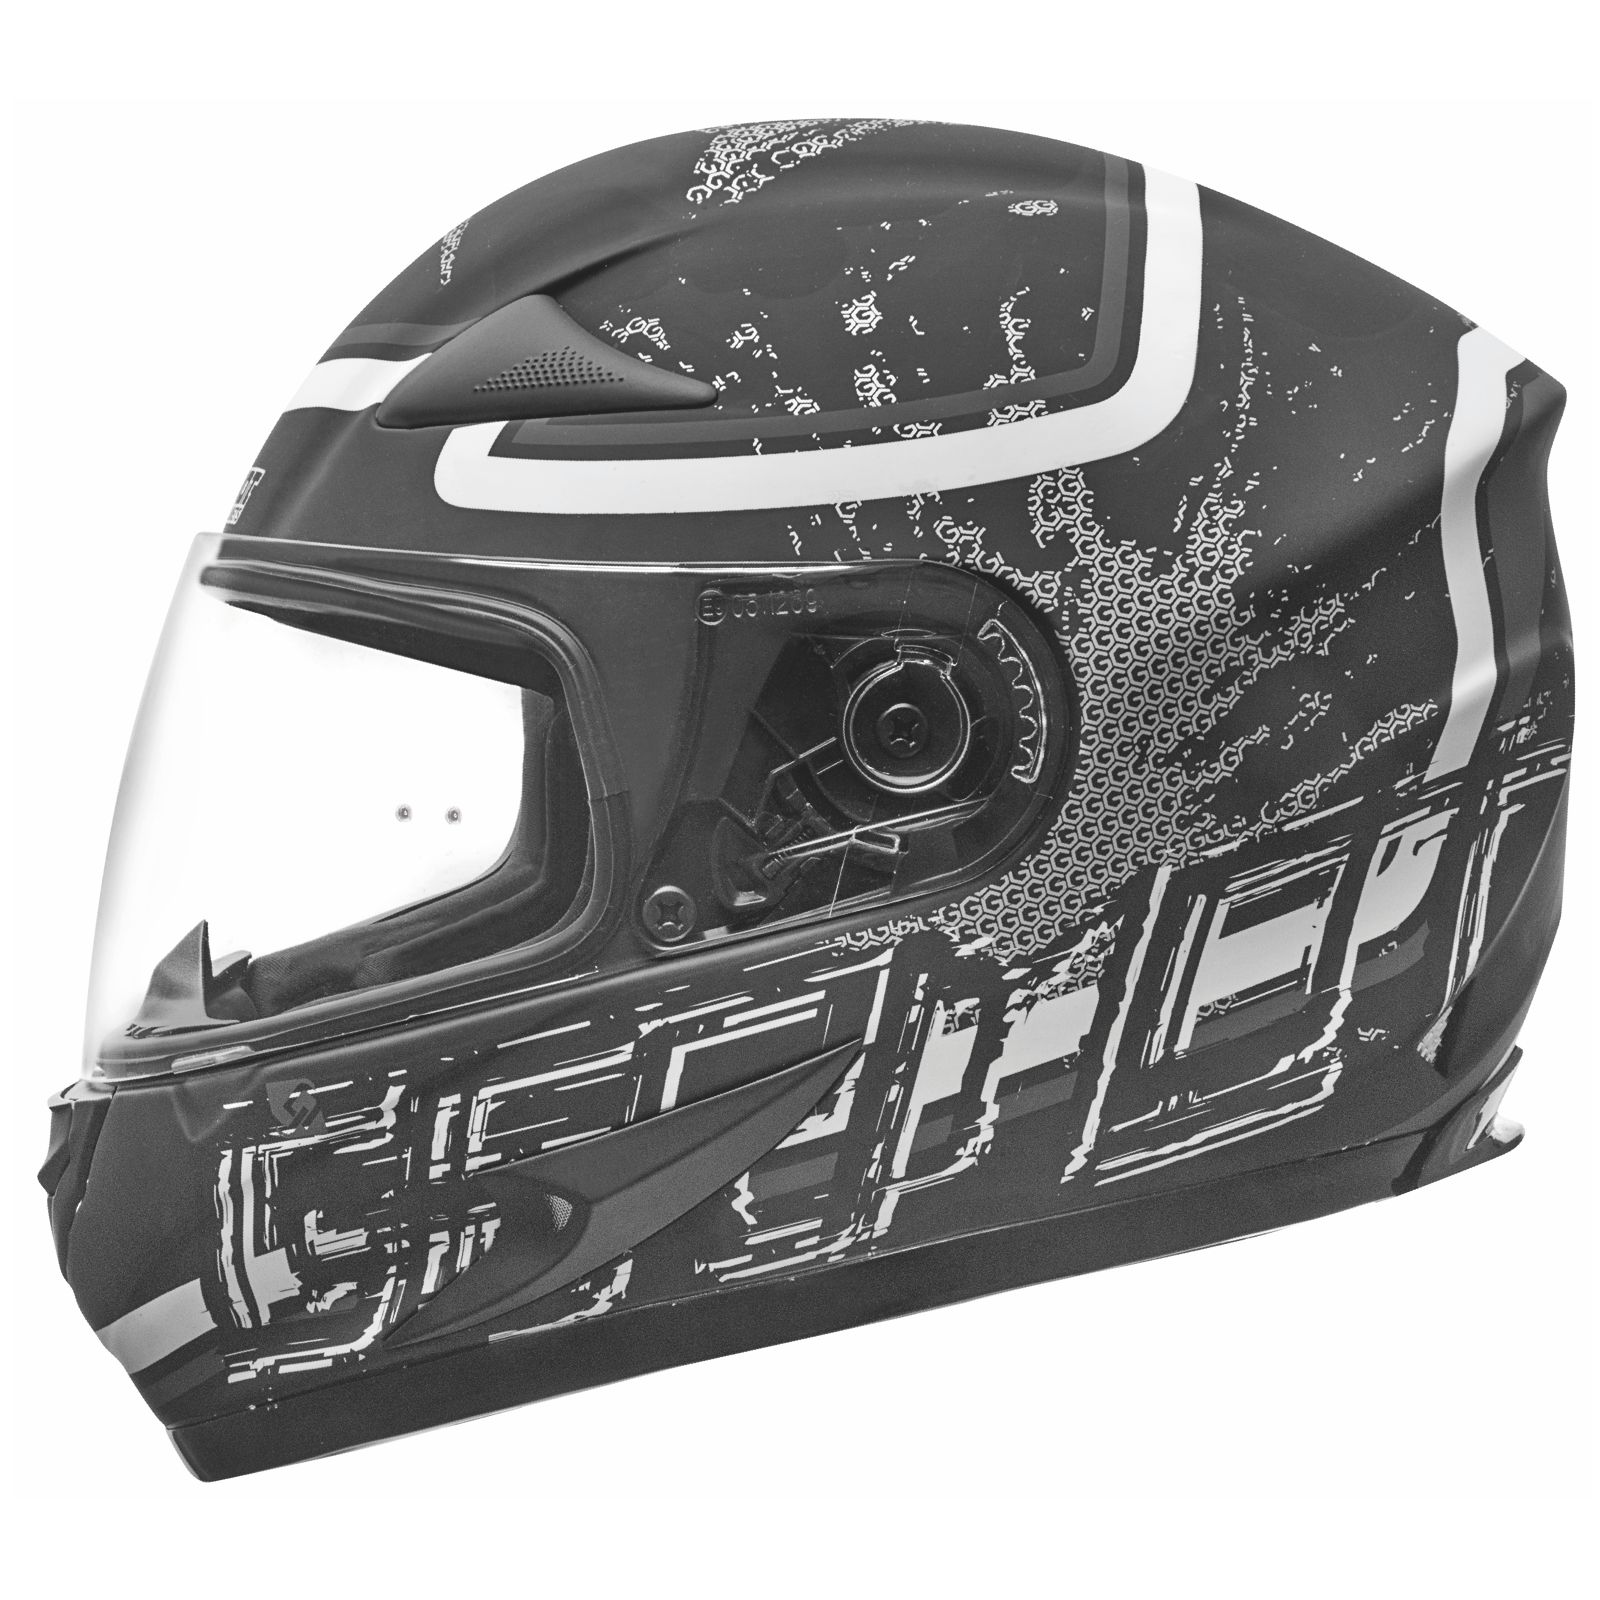 Germot Motorrad Helm GM 720 Integralhelm Übergröße matt Black 